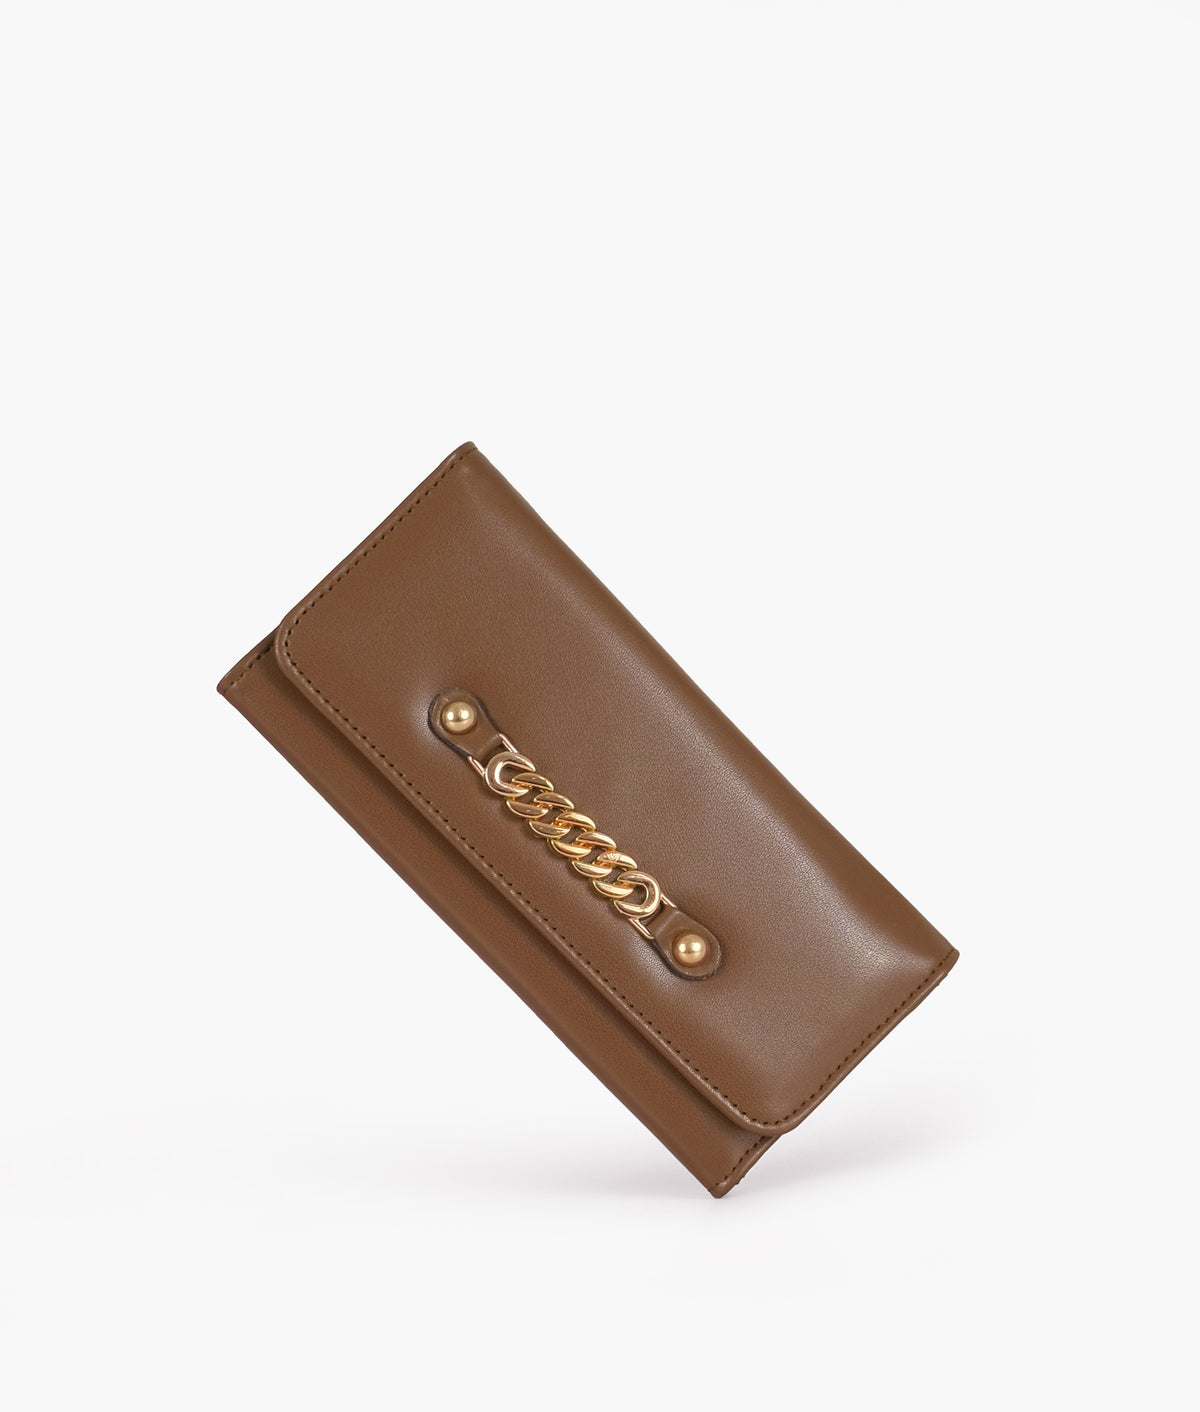 Brown three-fold wallet